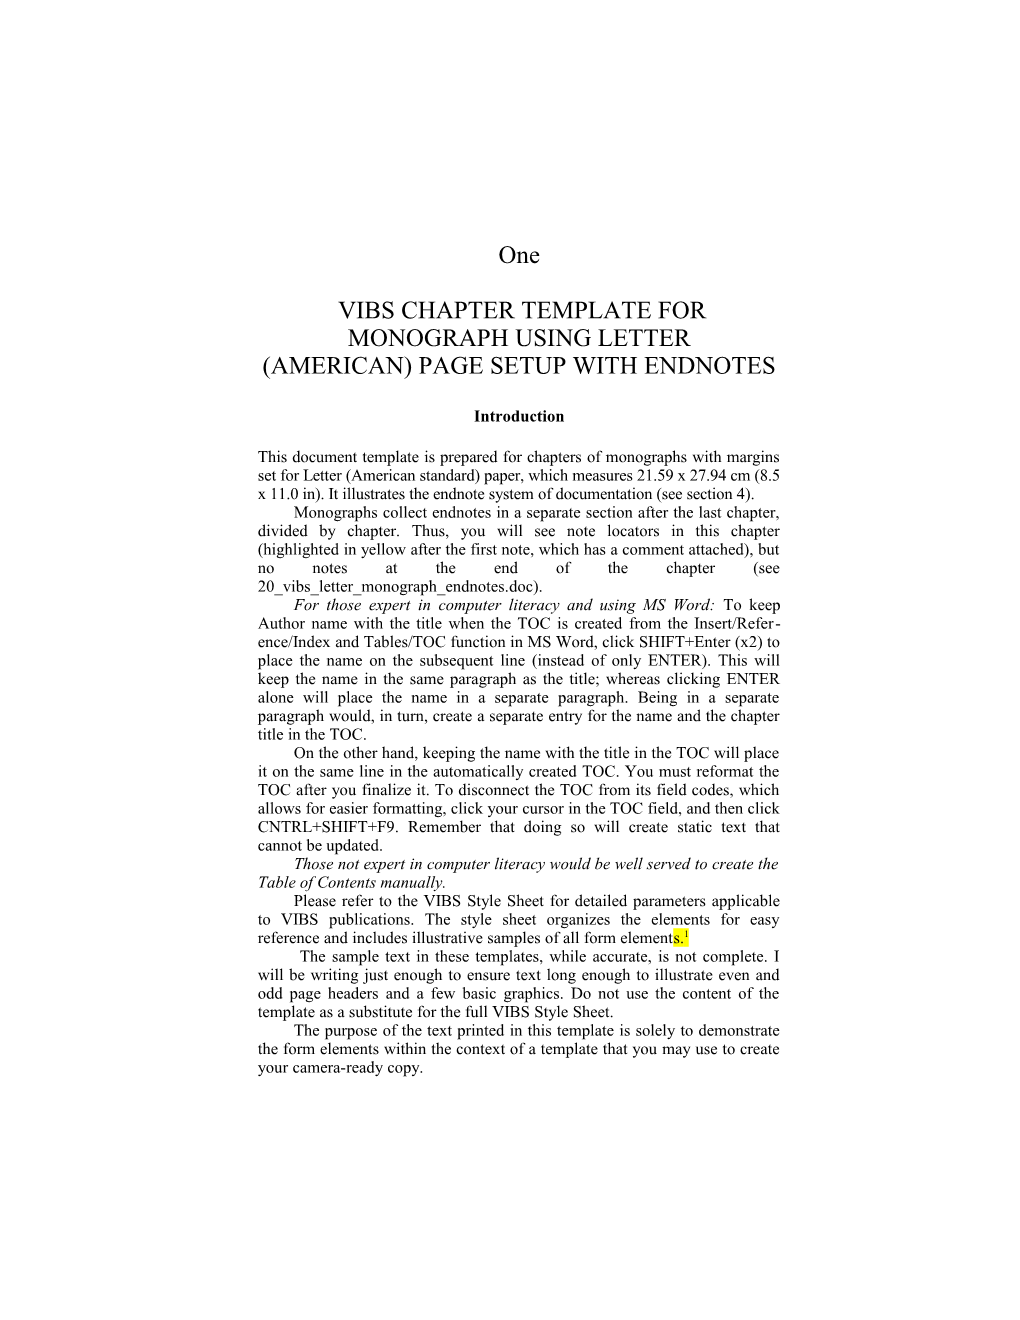 VIBS Monograph Chpt. Endnotes Letter